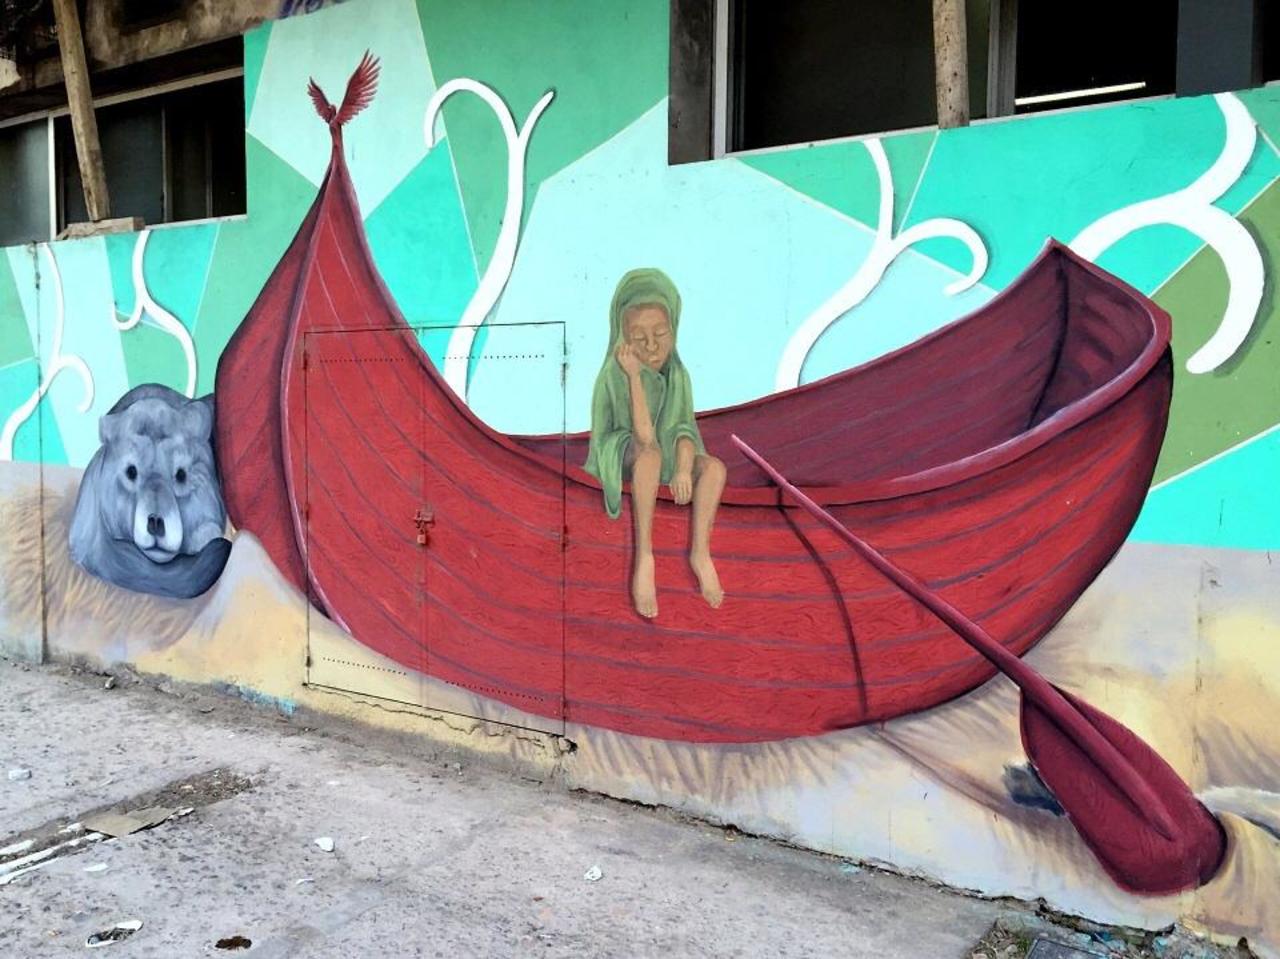 RT @DickieRandrup: #Graffiti de hoy: << El naufragio >> calle 22, 60y61 #LaPlata #Argentina #StreetArt #UrbanArt #ArteUrbano http://t.co/nAqtVymD5u